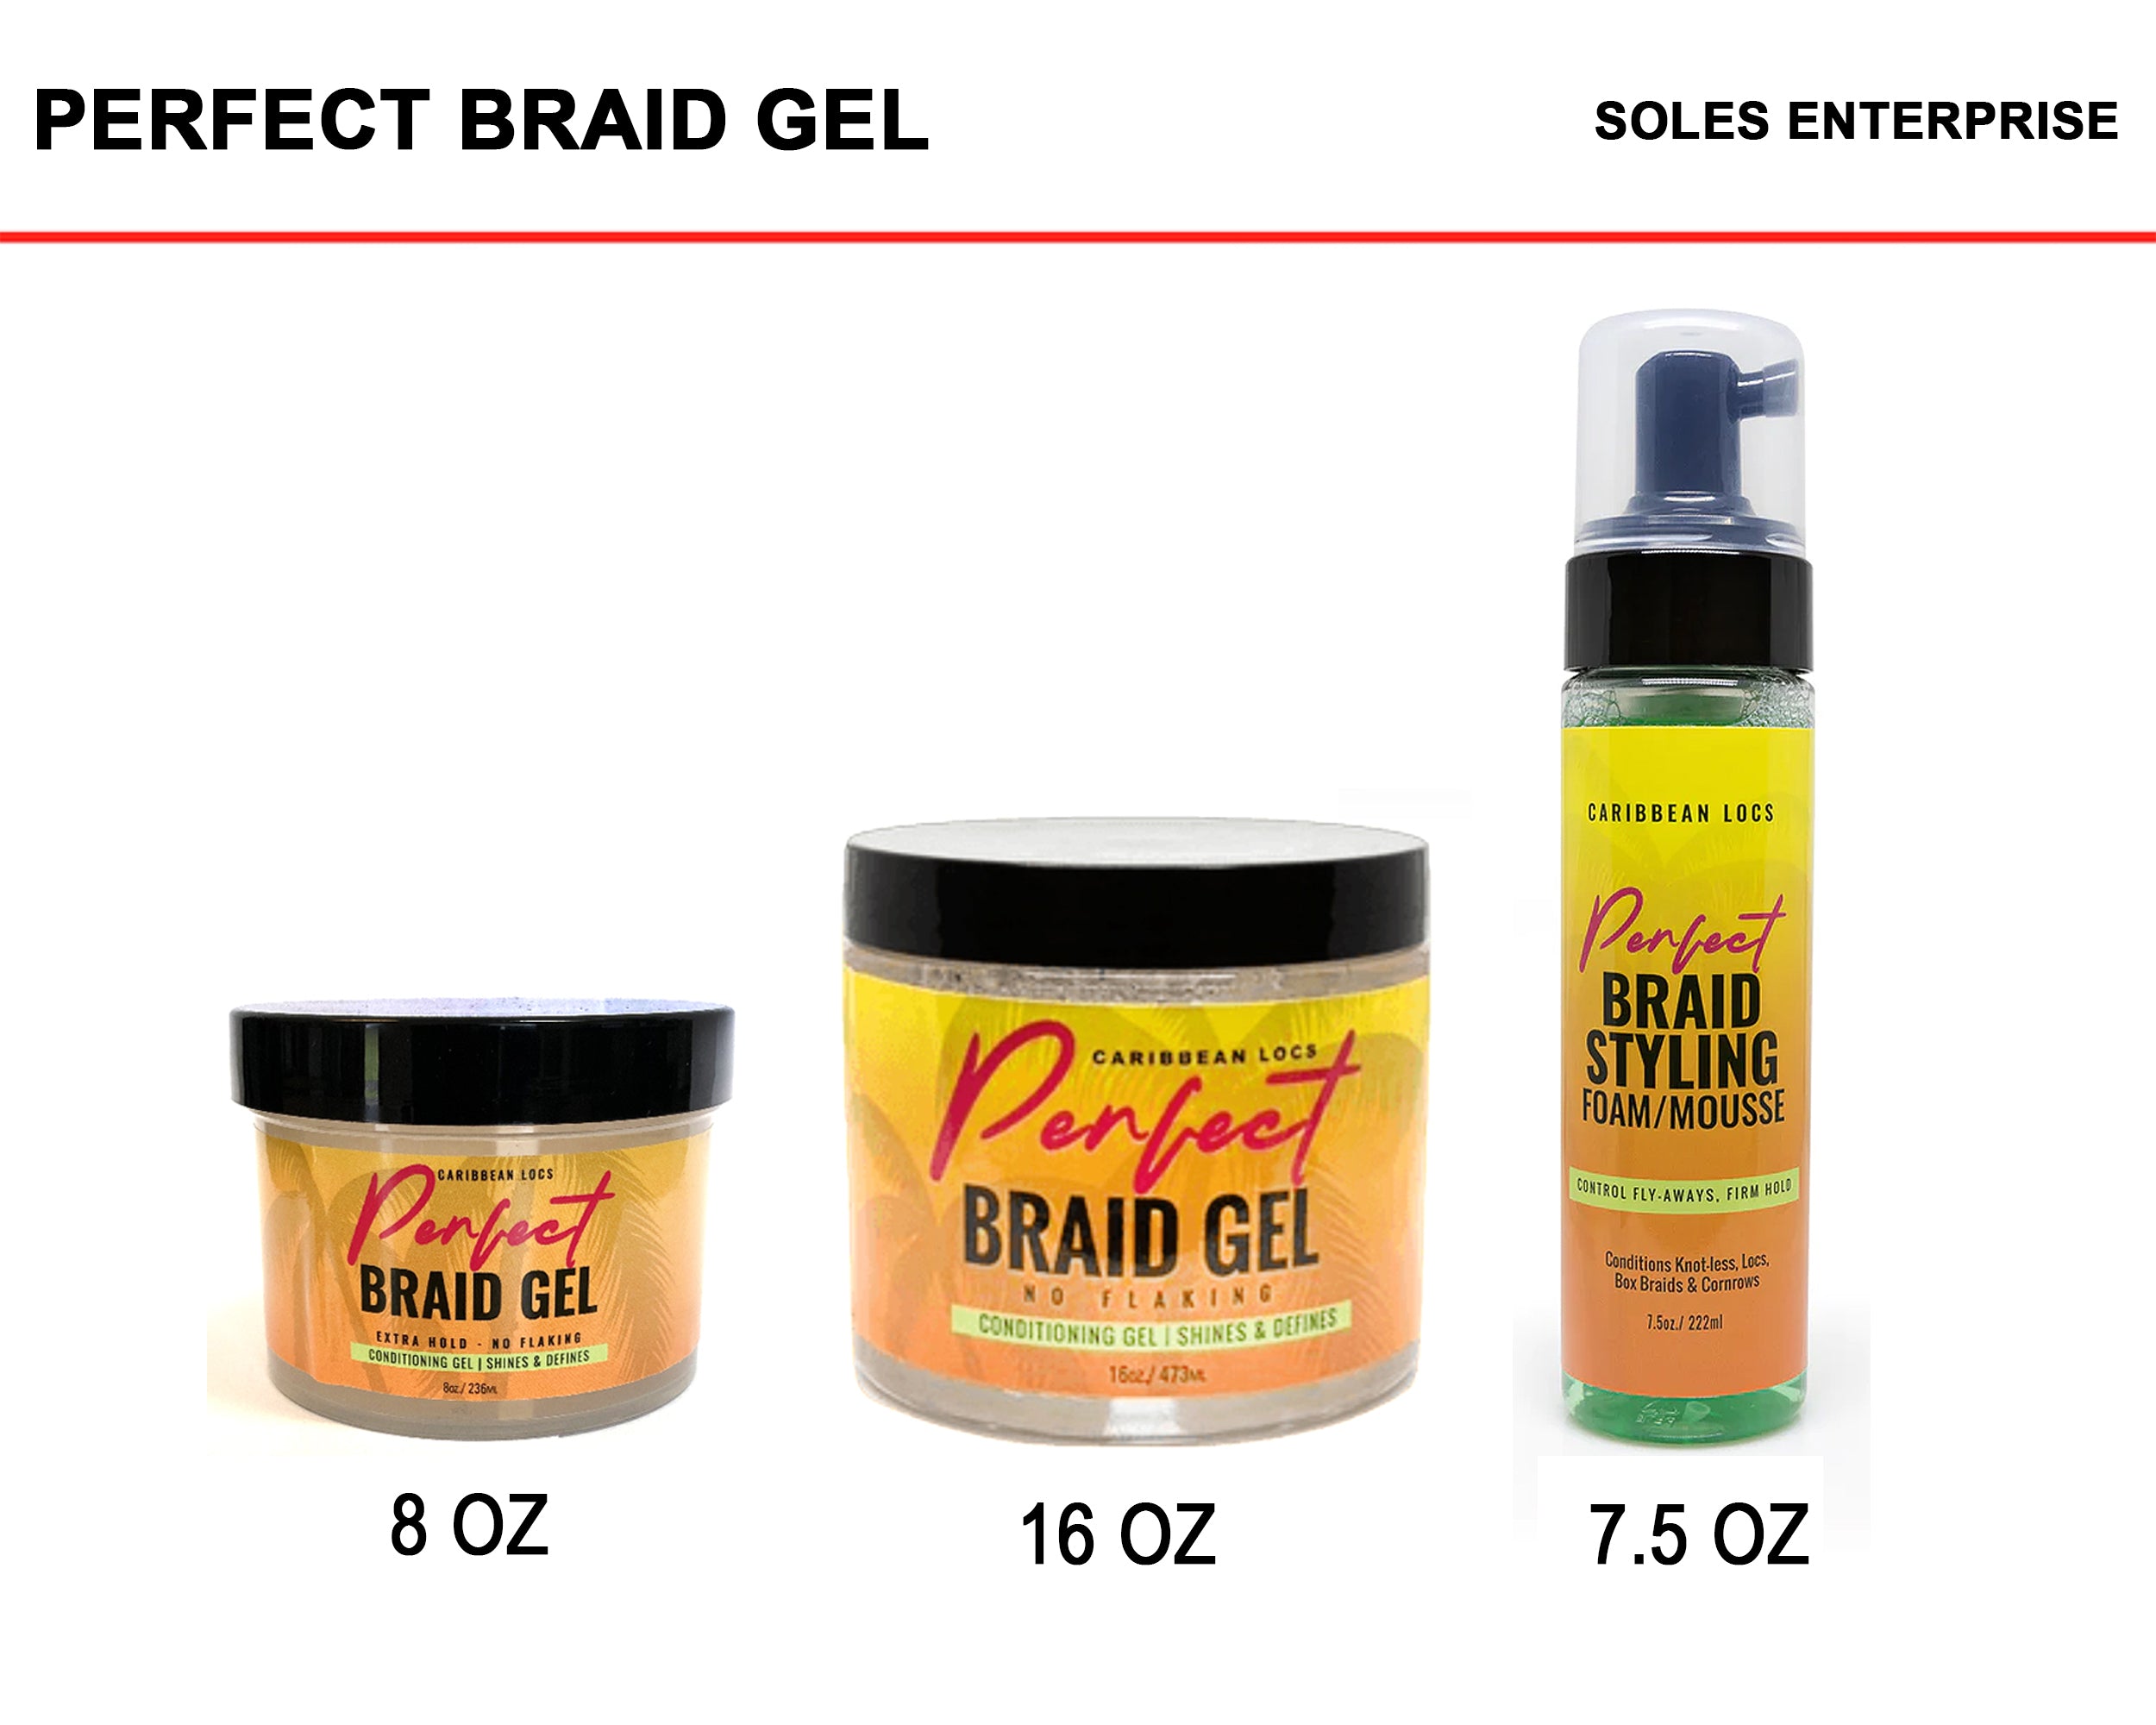 Crazy Braiding Gel – SOLES 365